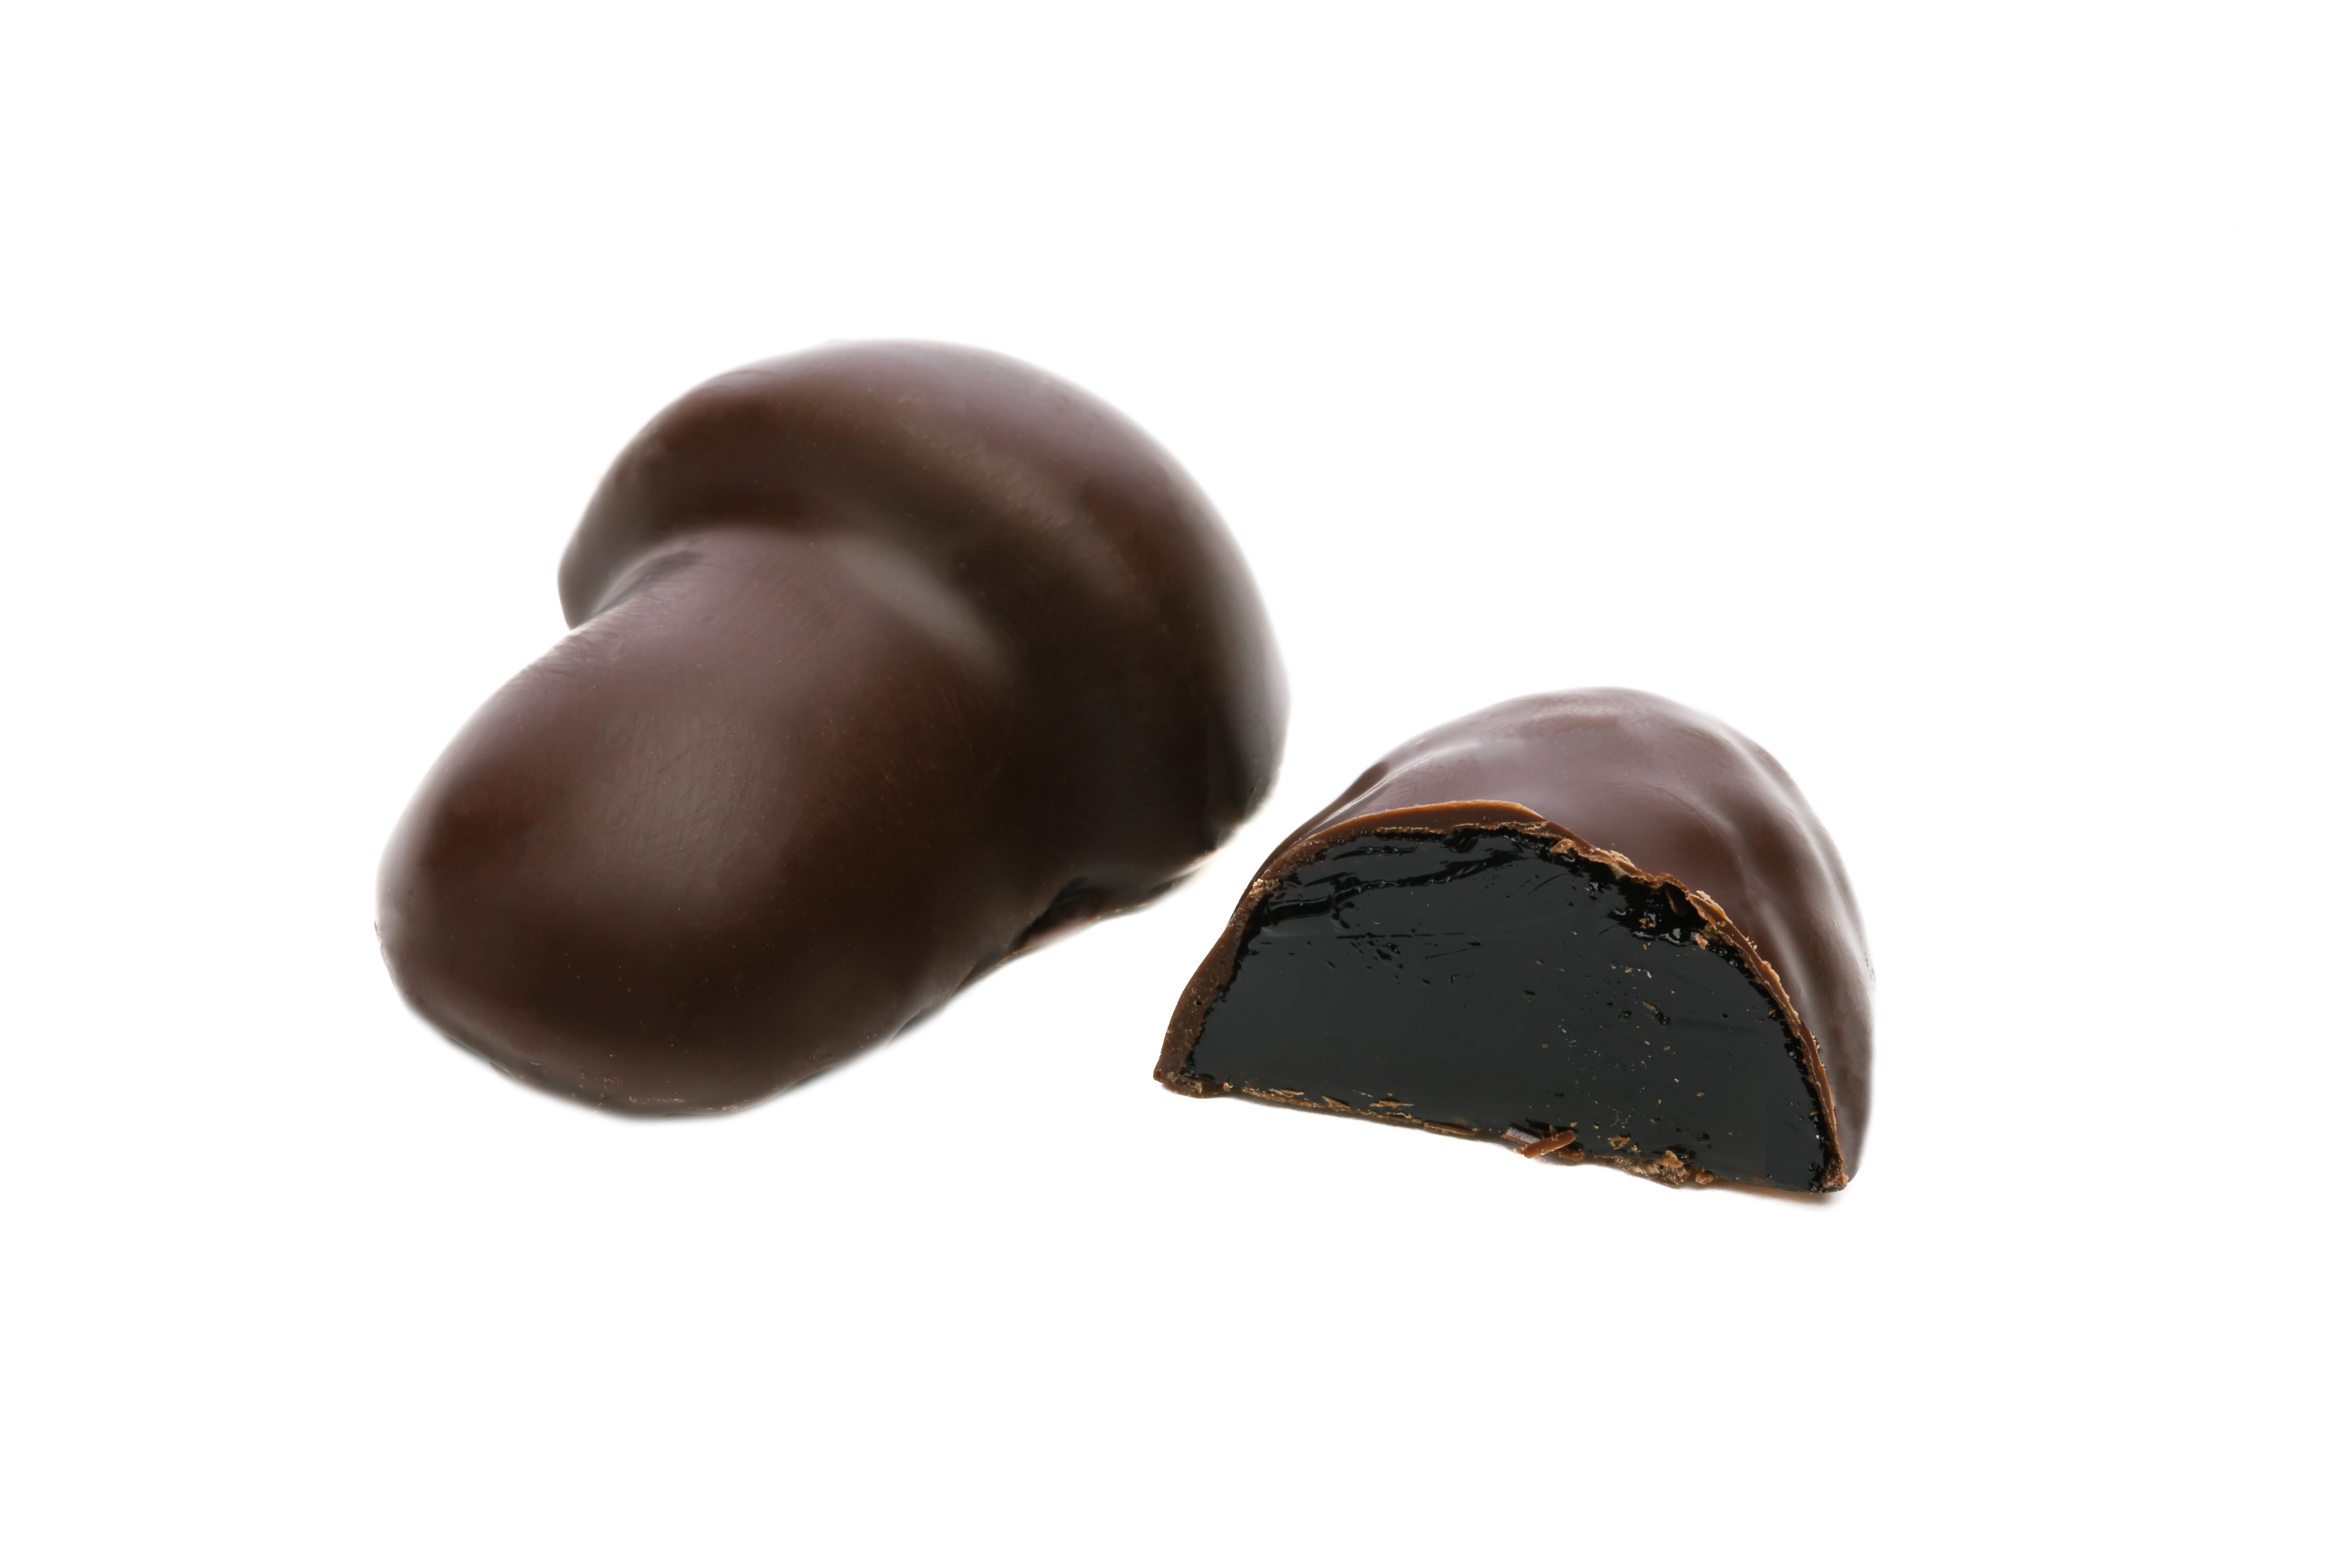 Мармелад сосновый в темном шоколаде коробка 500гр.Томск, Территория тайги